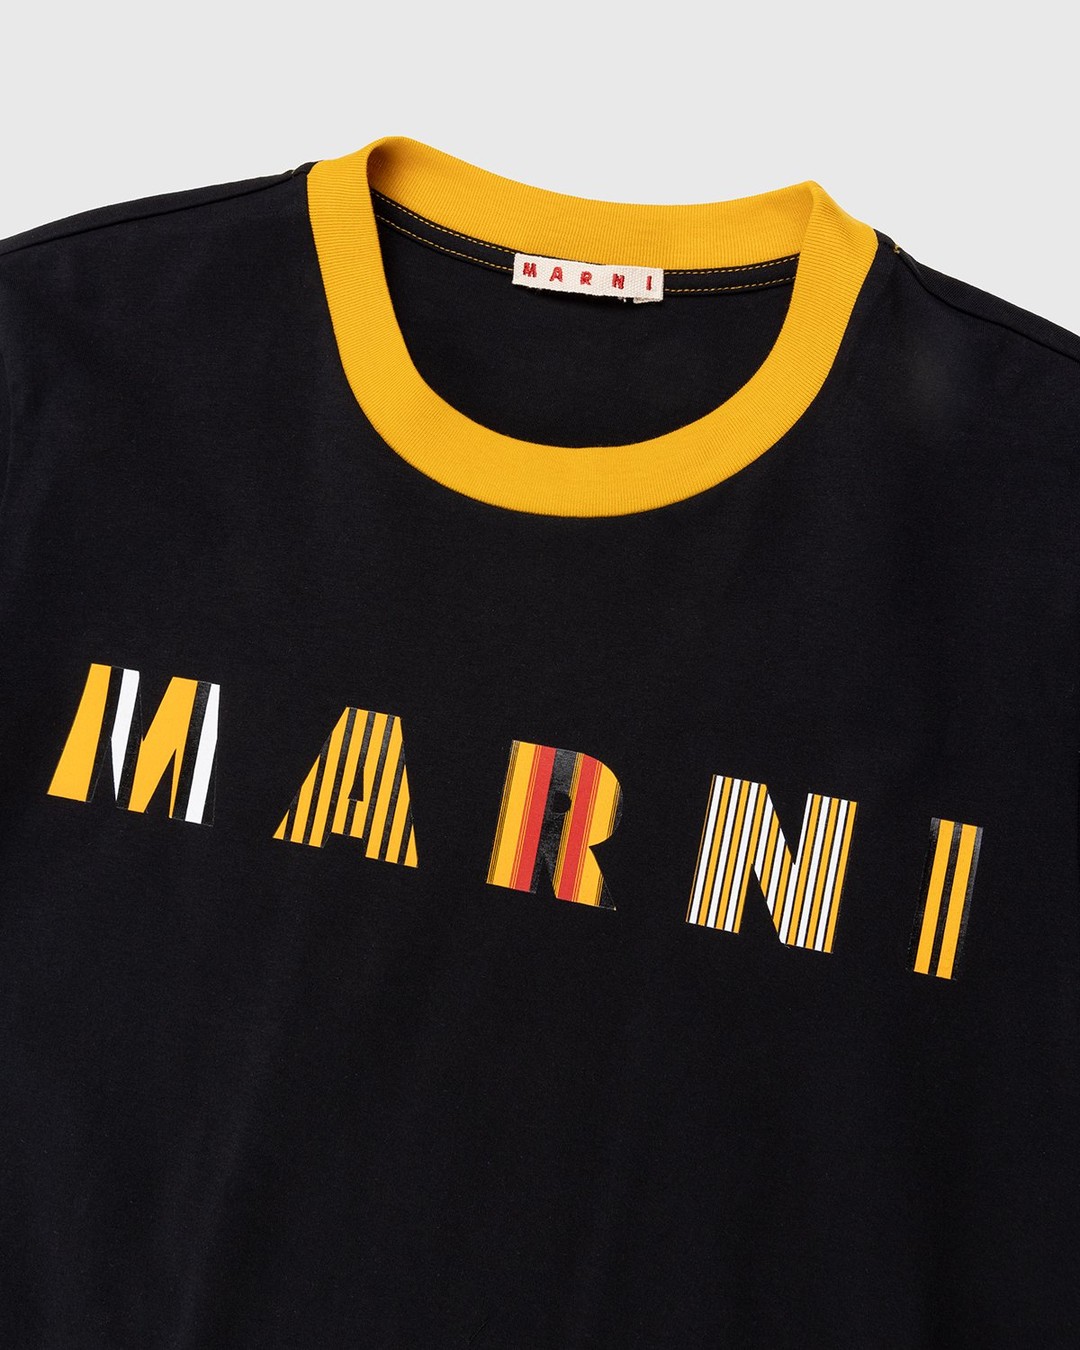 Marni – Stripe Logo Bio Jersey T-Shirt Black/Gold - Tops - Yellow - Image 4